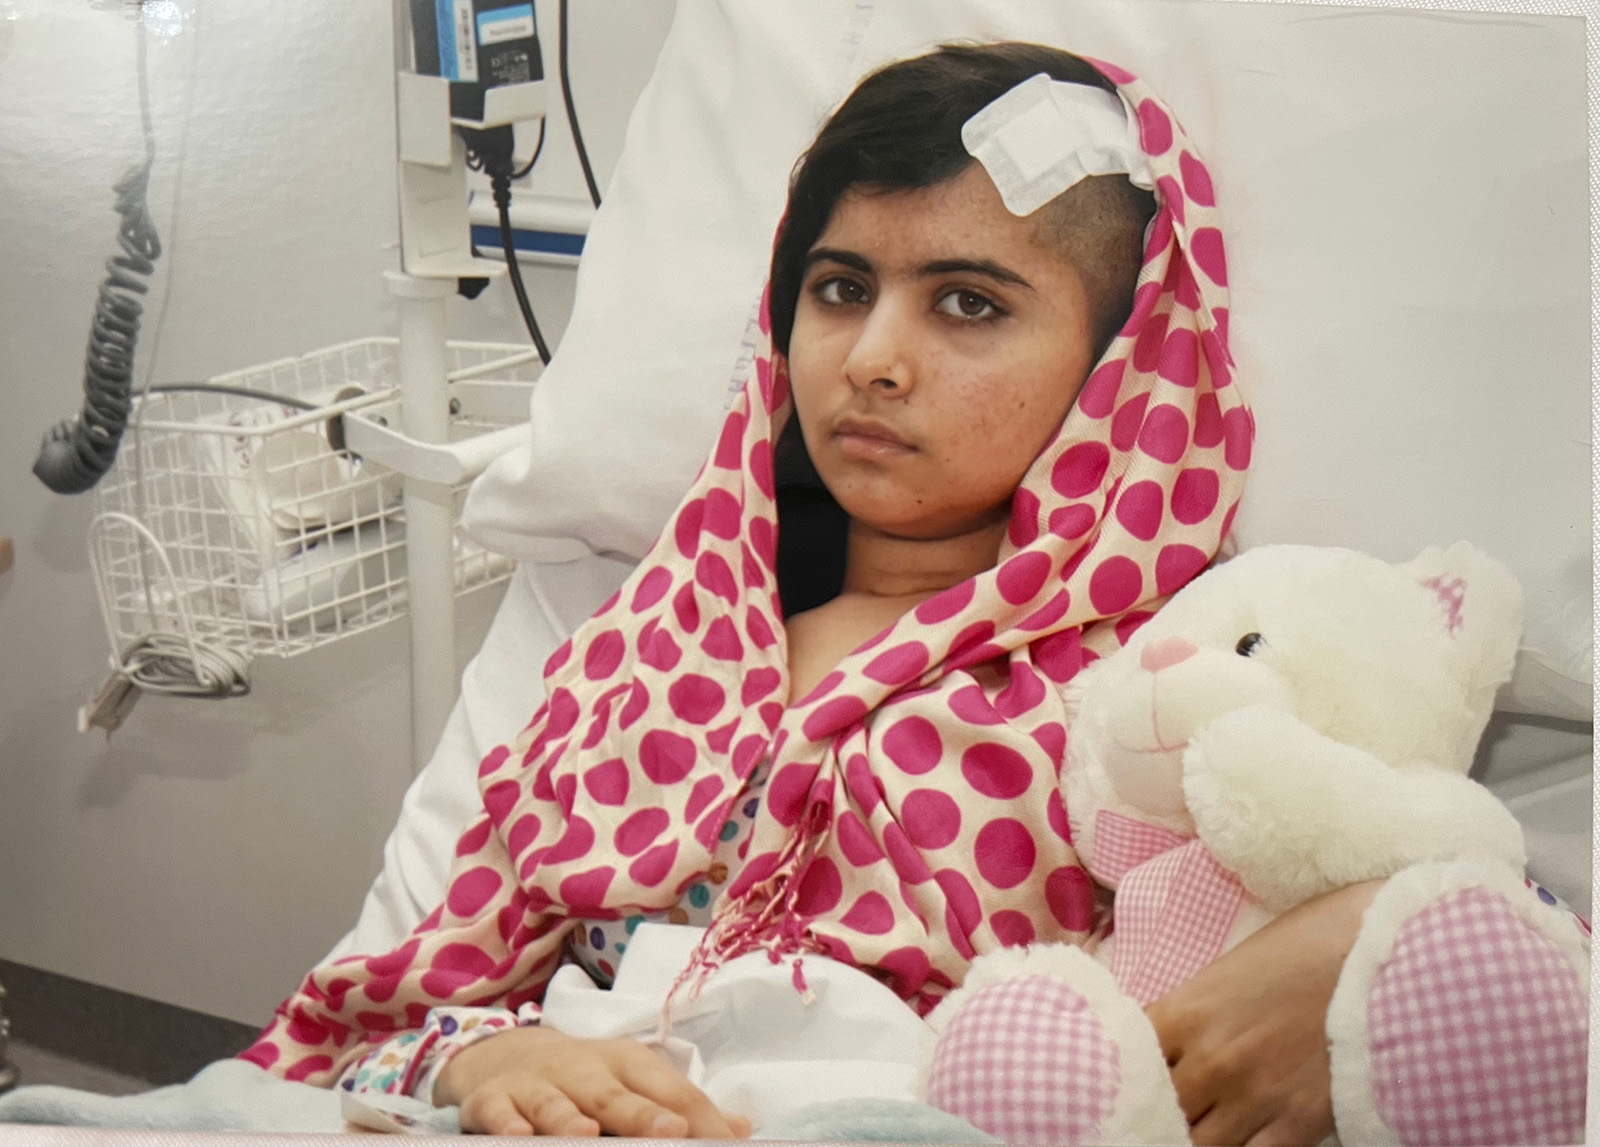 Malala Yousafzai: Schoolgirl True Superhero